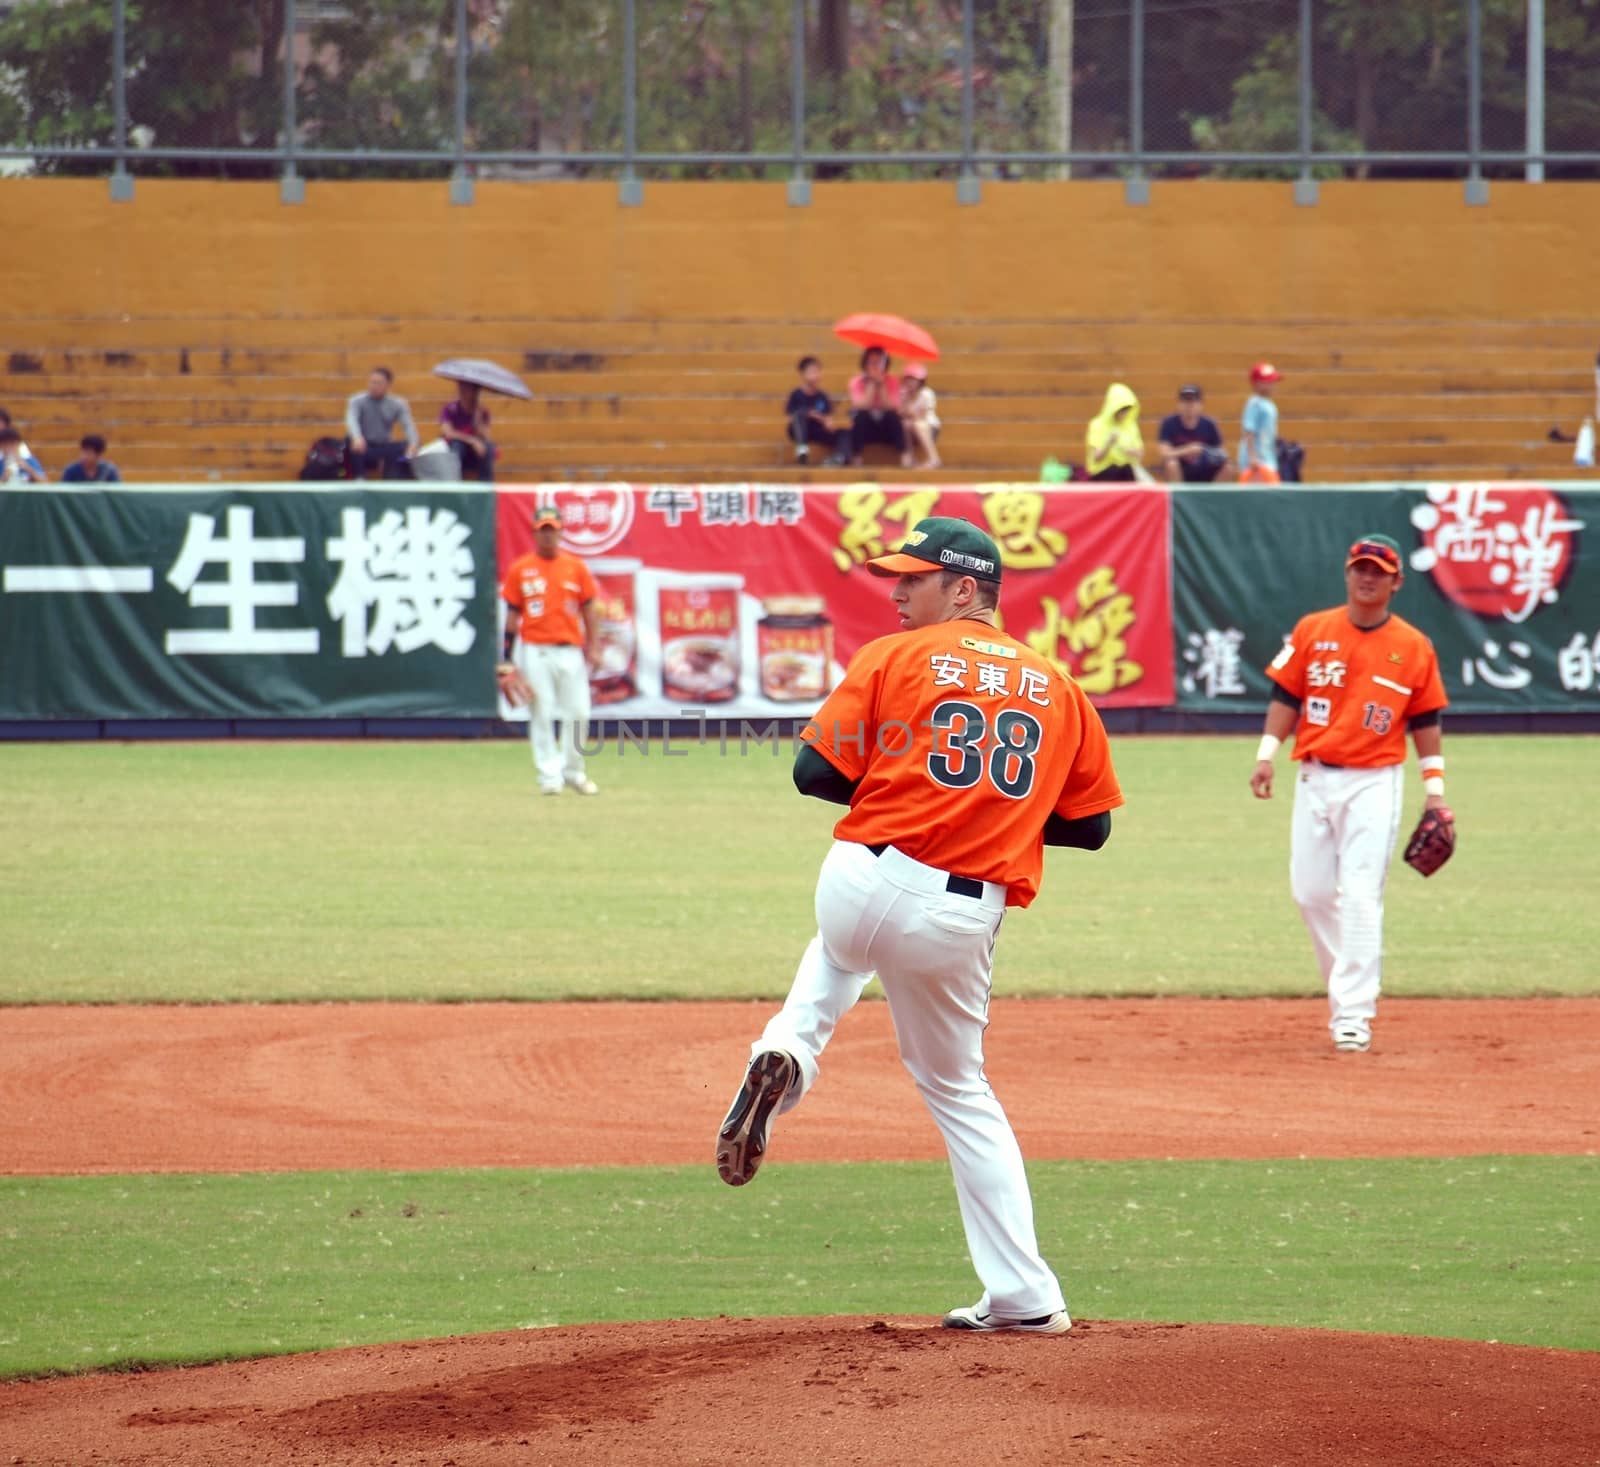 Professional Baseball Game in Taiwan by shiyali